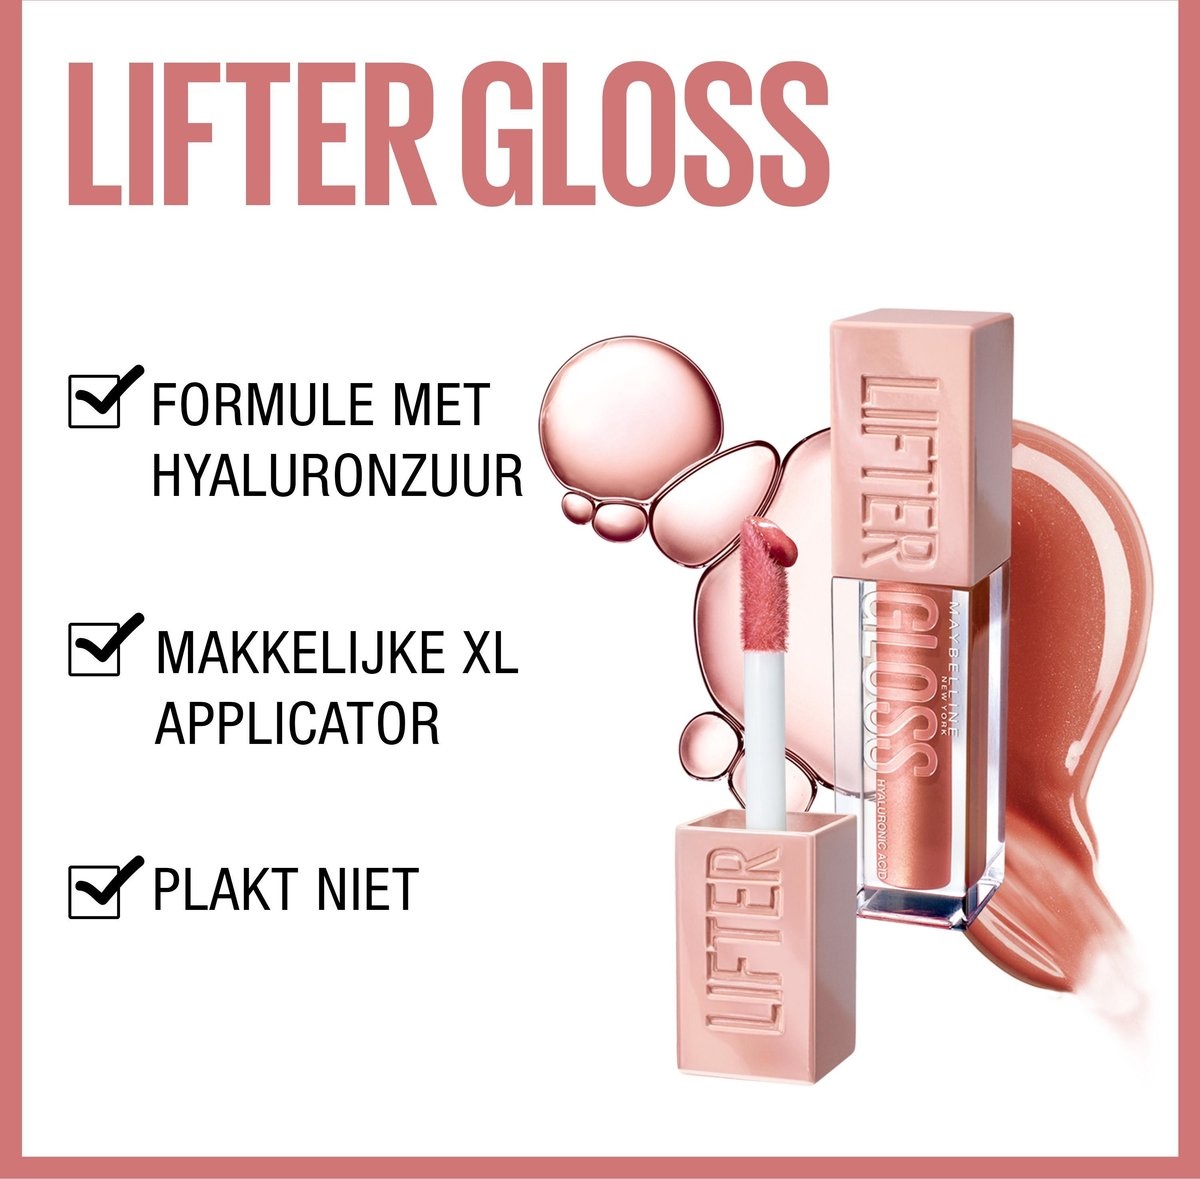 Maybelline New York - Lifter Gloss Lipgloss - 3 Moon - Pink - Glossy Lipgloss - 5.4ml